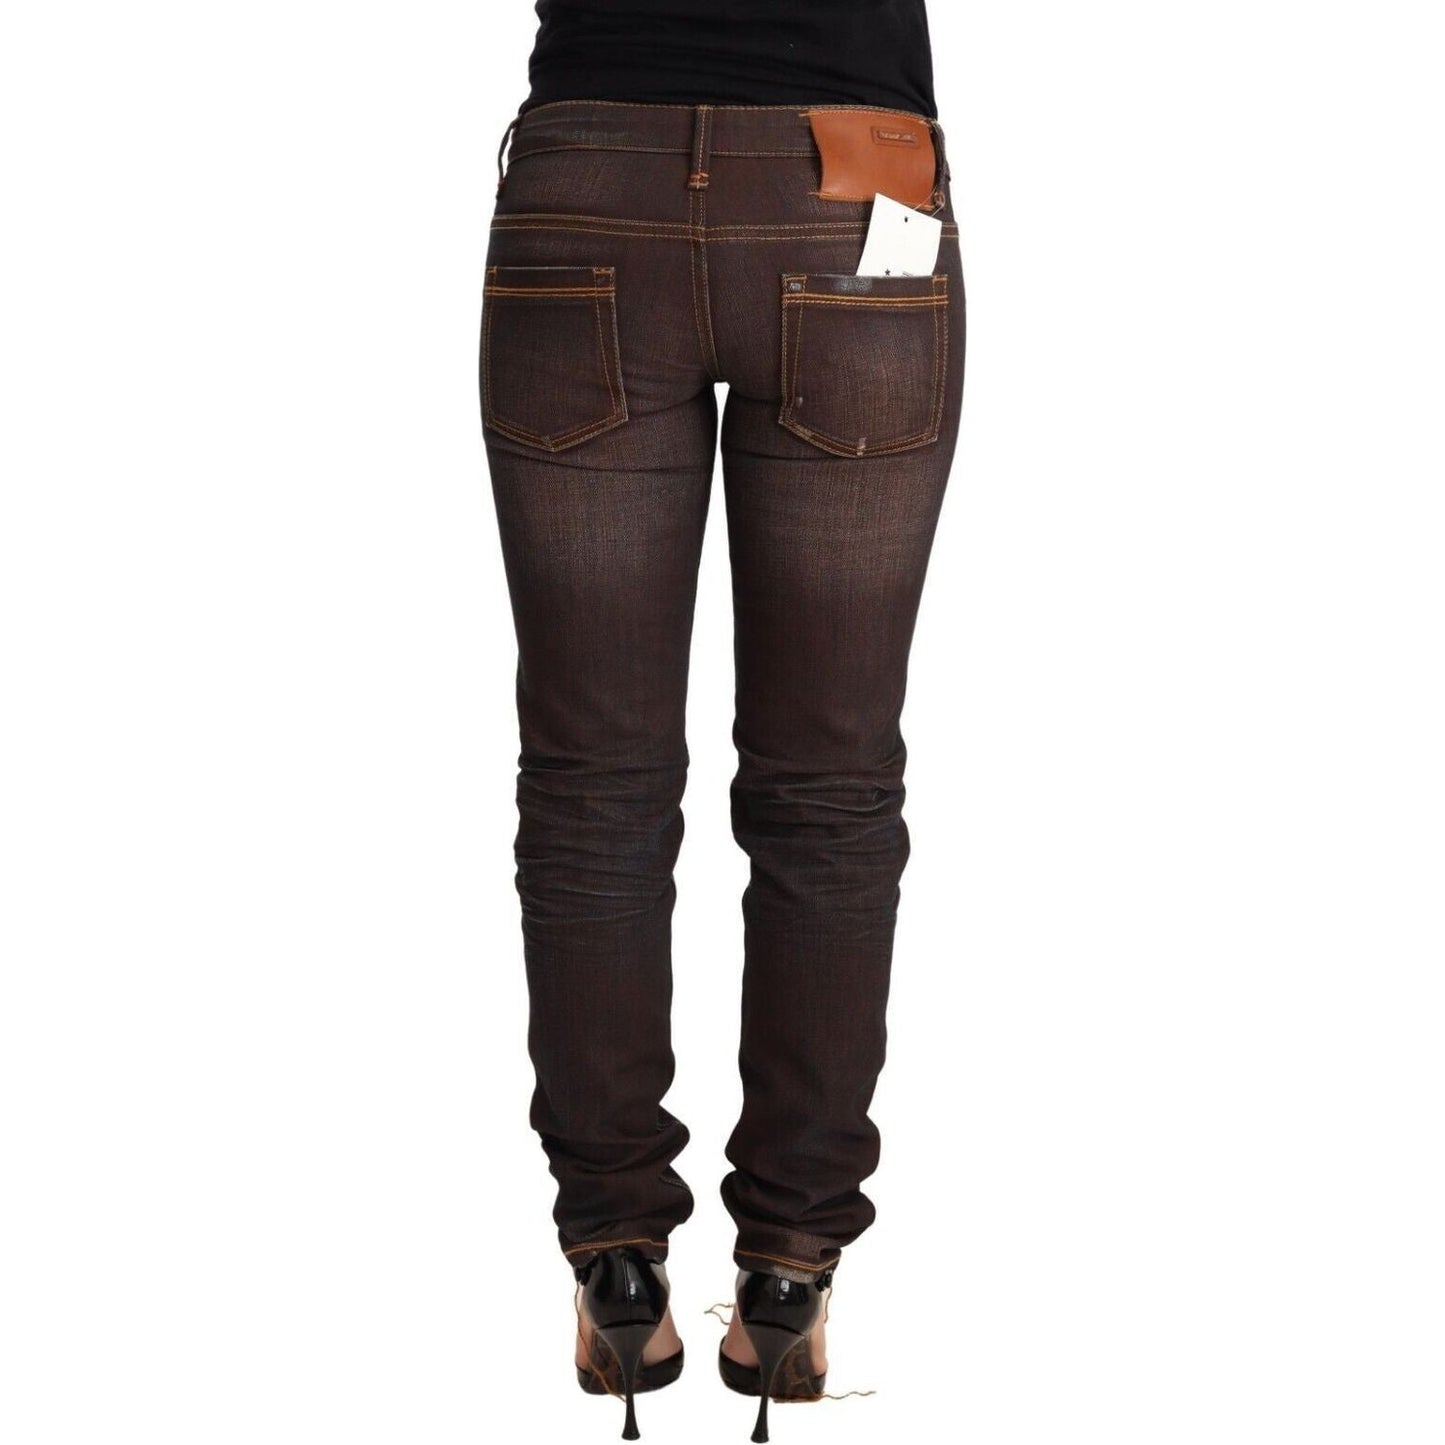 Acht Chic Low Waist Skinny Brown Jeans brown-washed-cotton-slim-fit-denim-low-waist-trouser-jeans Jeans & Pants s-l1600-1-110-9893265c-758.jpg